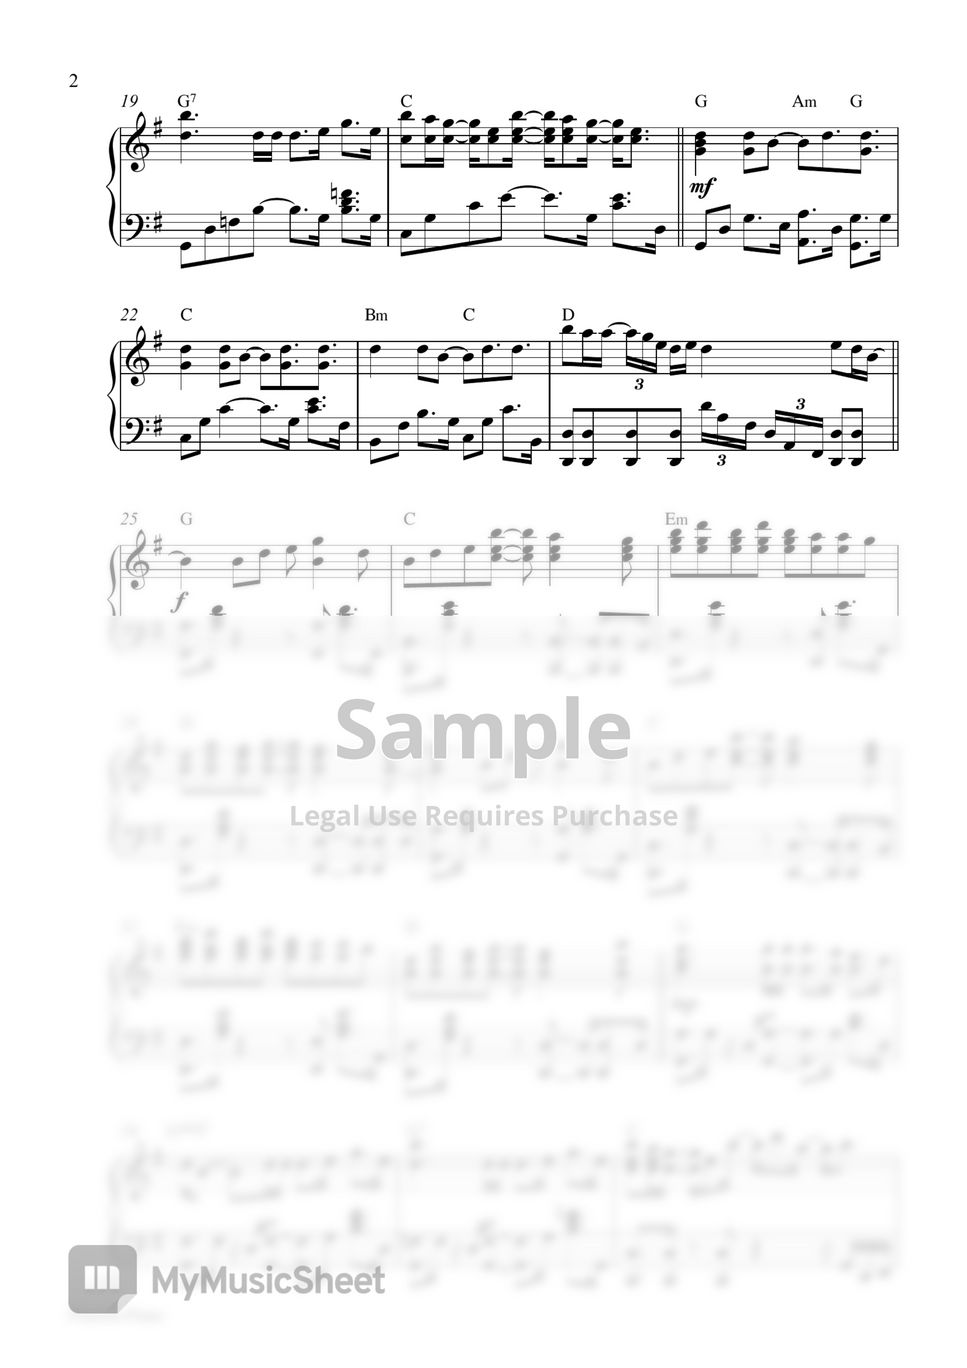 Ariana Grande - Santa Tell Me (Piano Sheet) by Pianella Piano